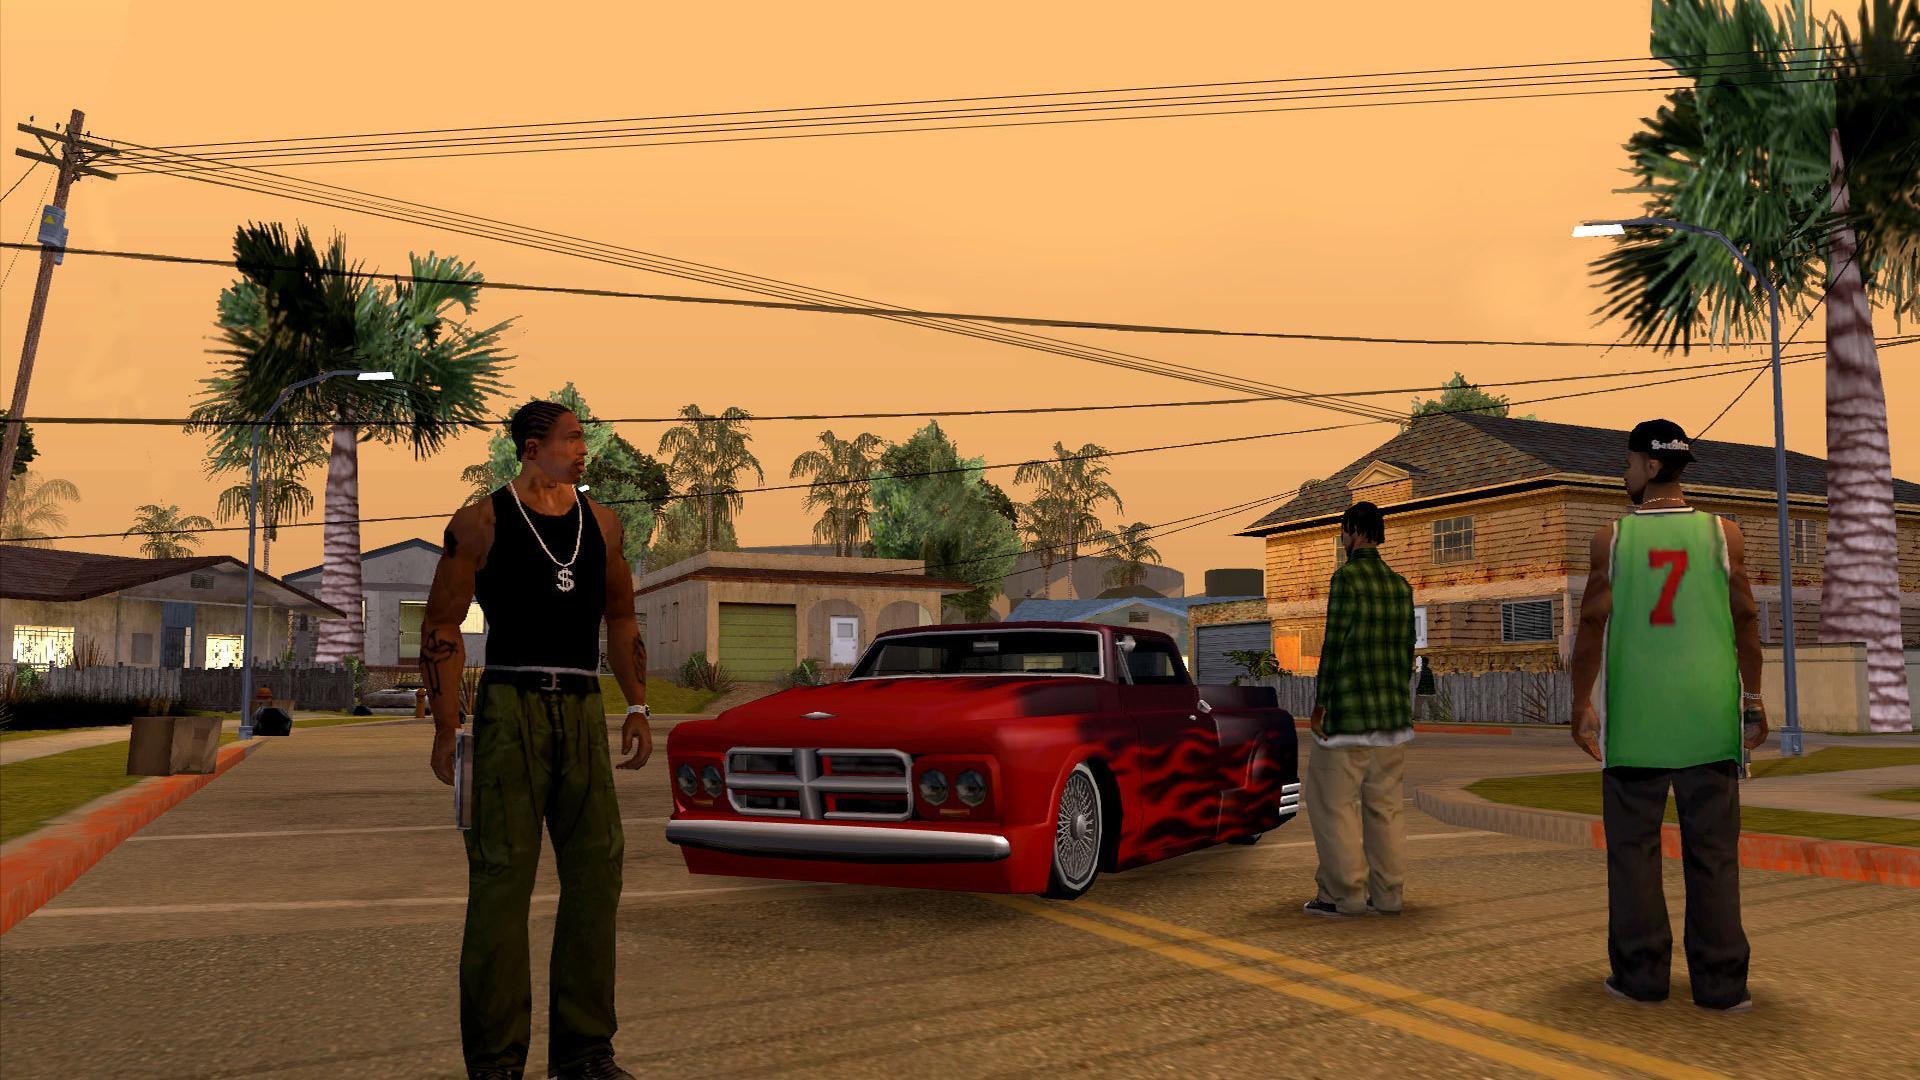 Obrázok z hry Grand Theft Auto: San Andreas.